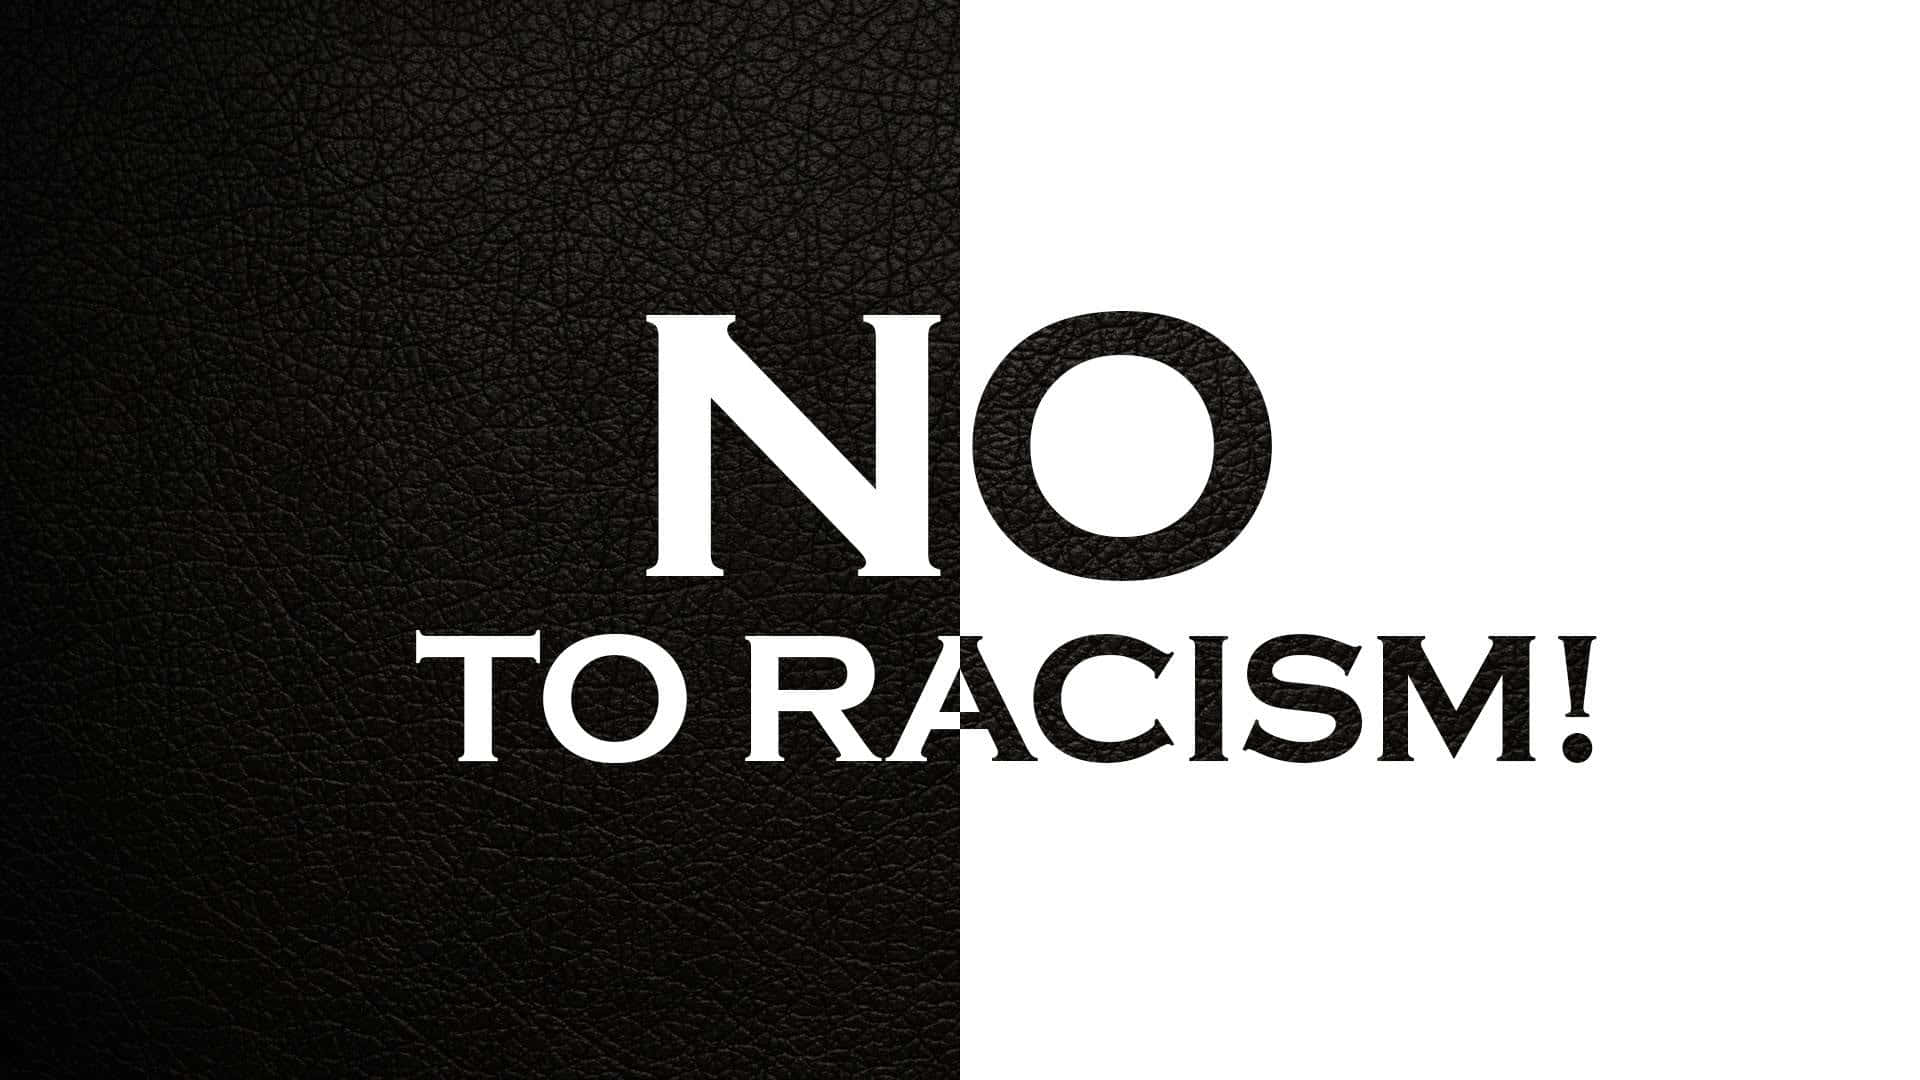 Black And White Racism Slogan Wallpaper